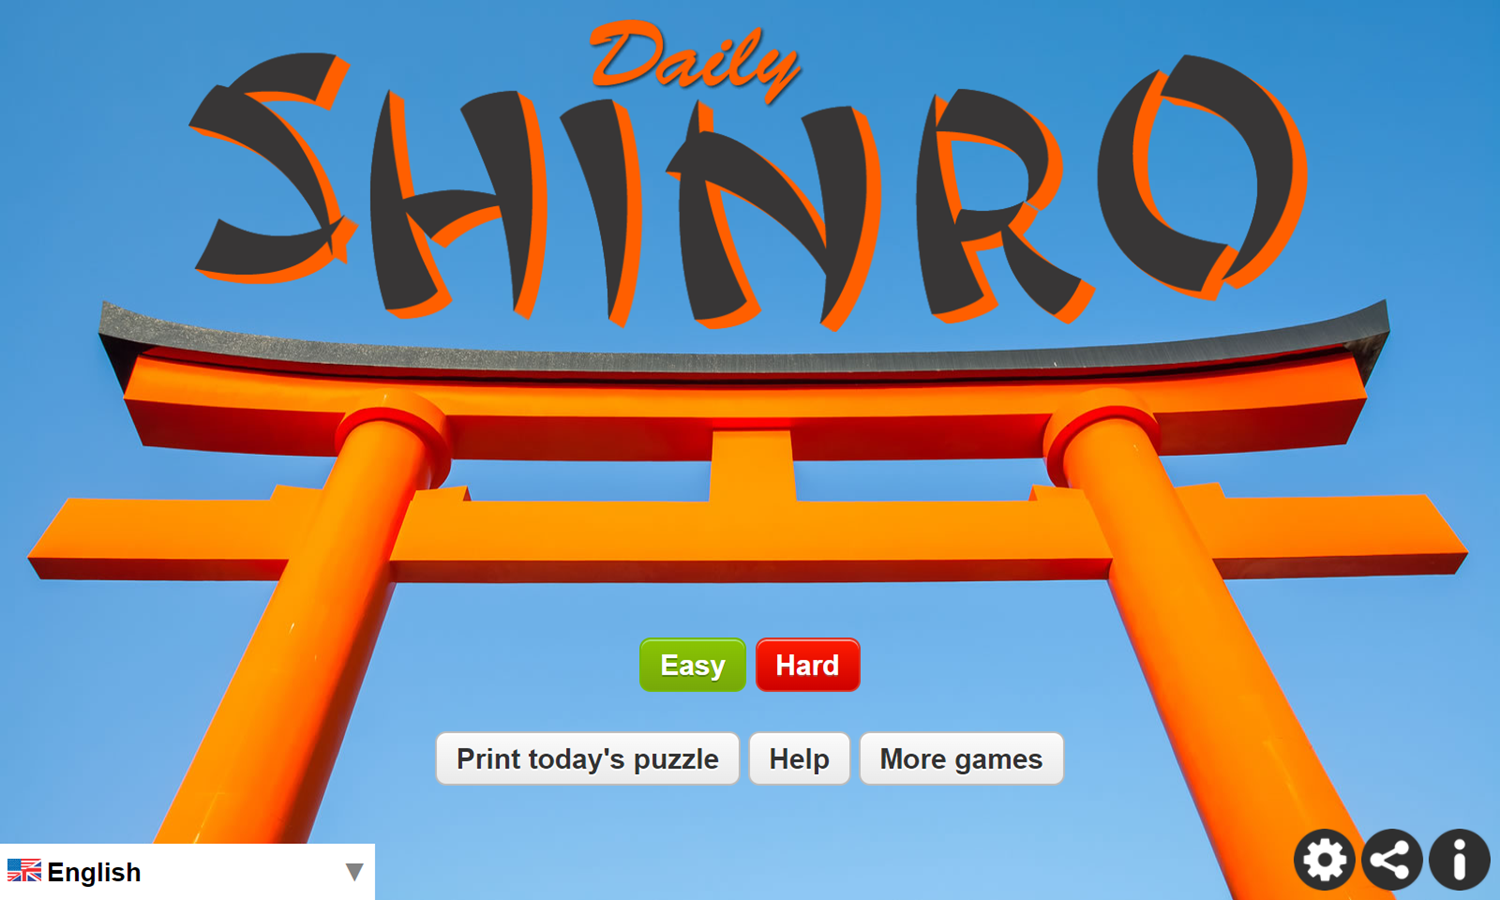 Daily Shinro Game Welcome Screen Screenshot.